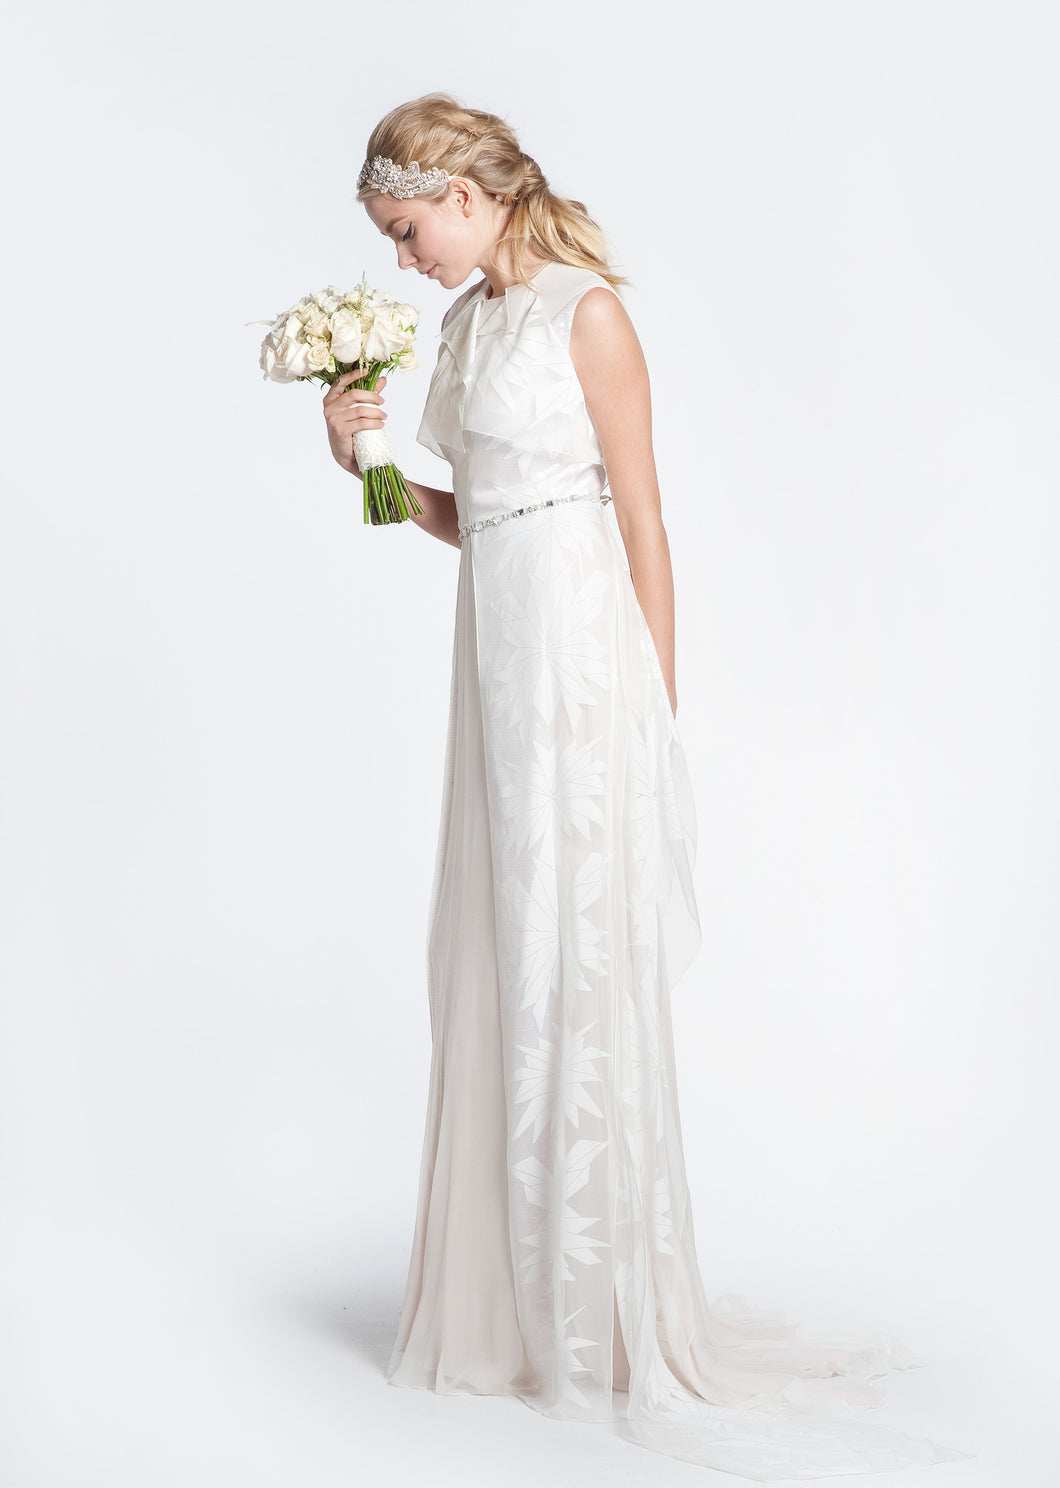 Bibhu Mohapatra 'Gwyneth' Blush & White Floral Wedding Dress - Bibhu Mohapatru - Nearly Newlywed Bridal Boutique - 1